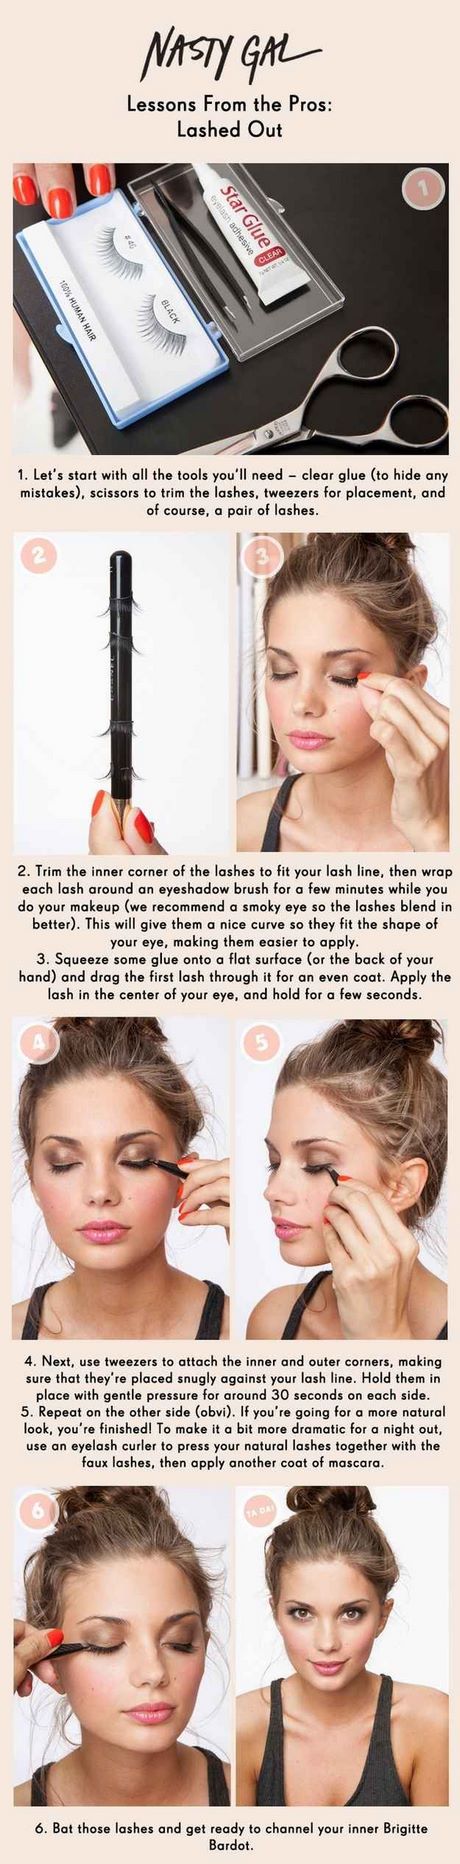 Buzzfeed make-up tutorial